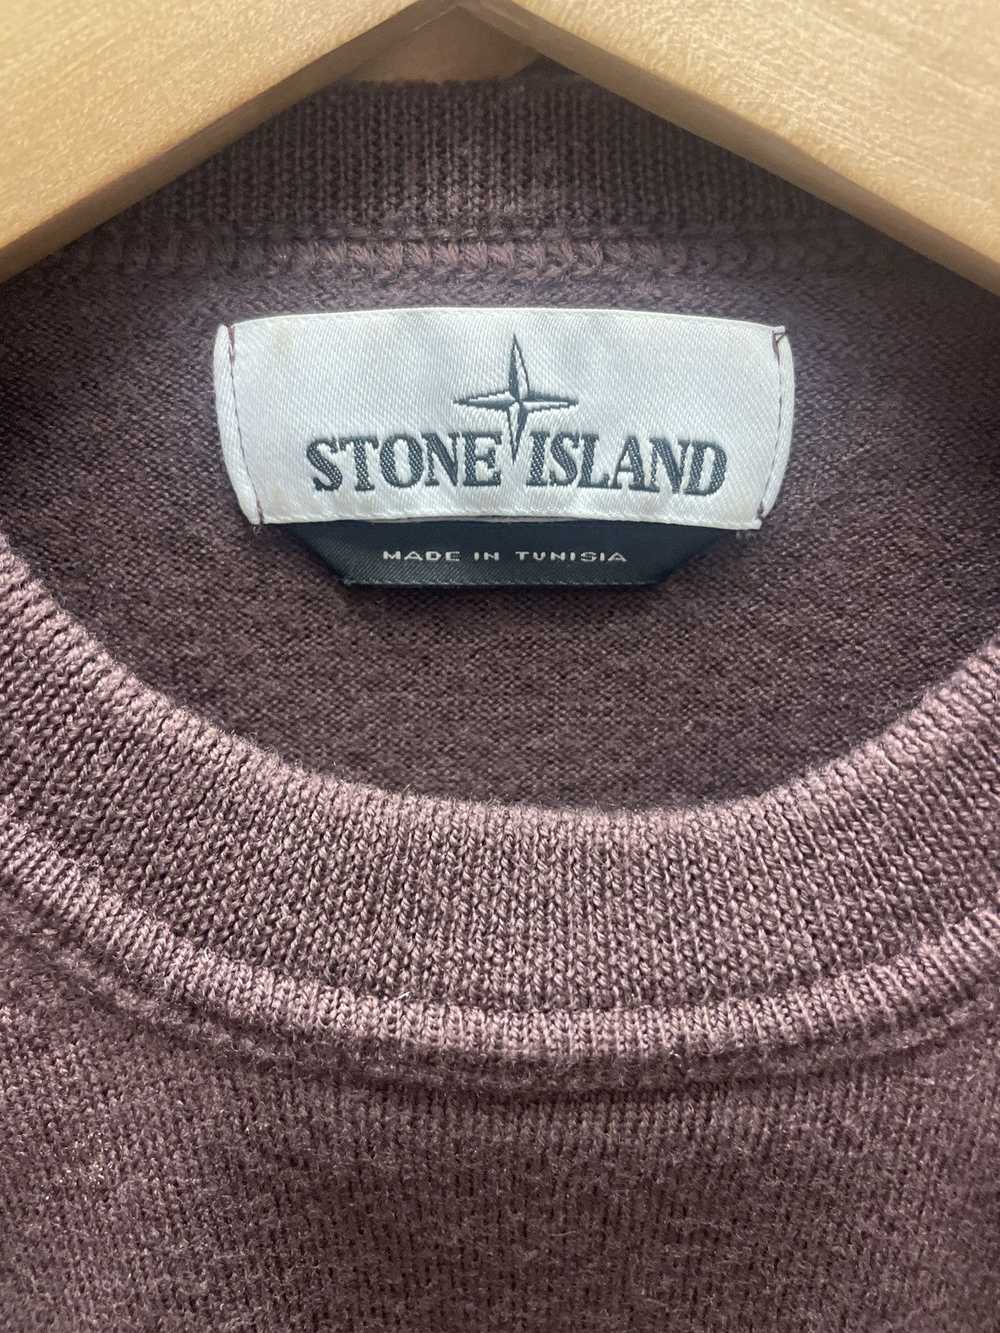 Stone Island Stone Island Sweater - Maroon - image 2